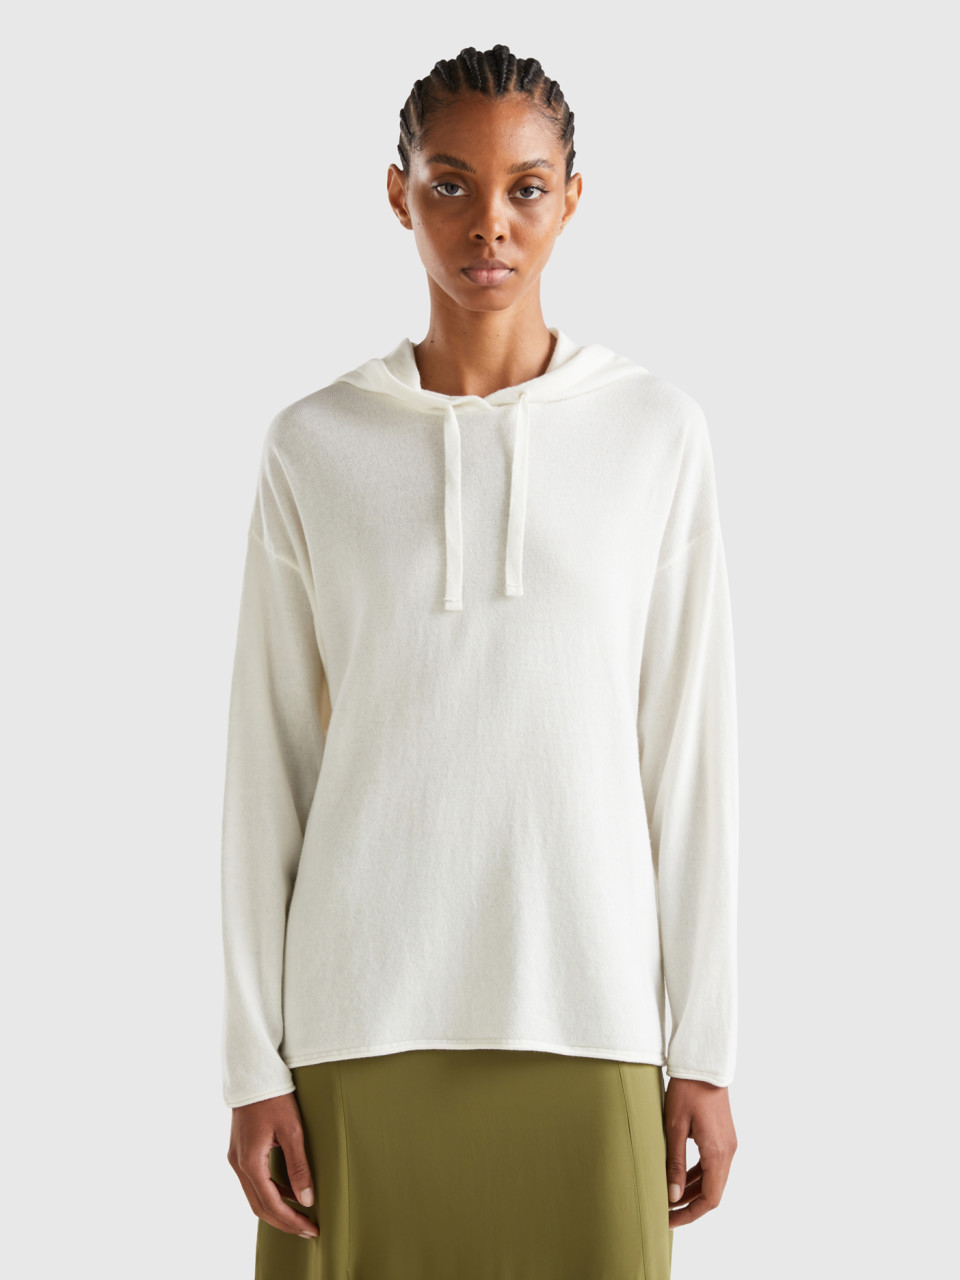 Benetton, Cream White Cashmere Blend Sweater With Hood, Creamy White, Women